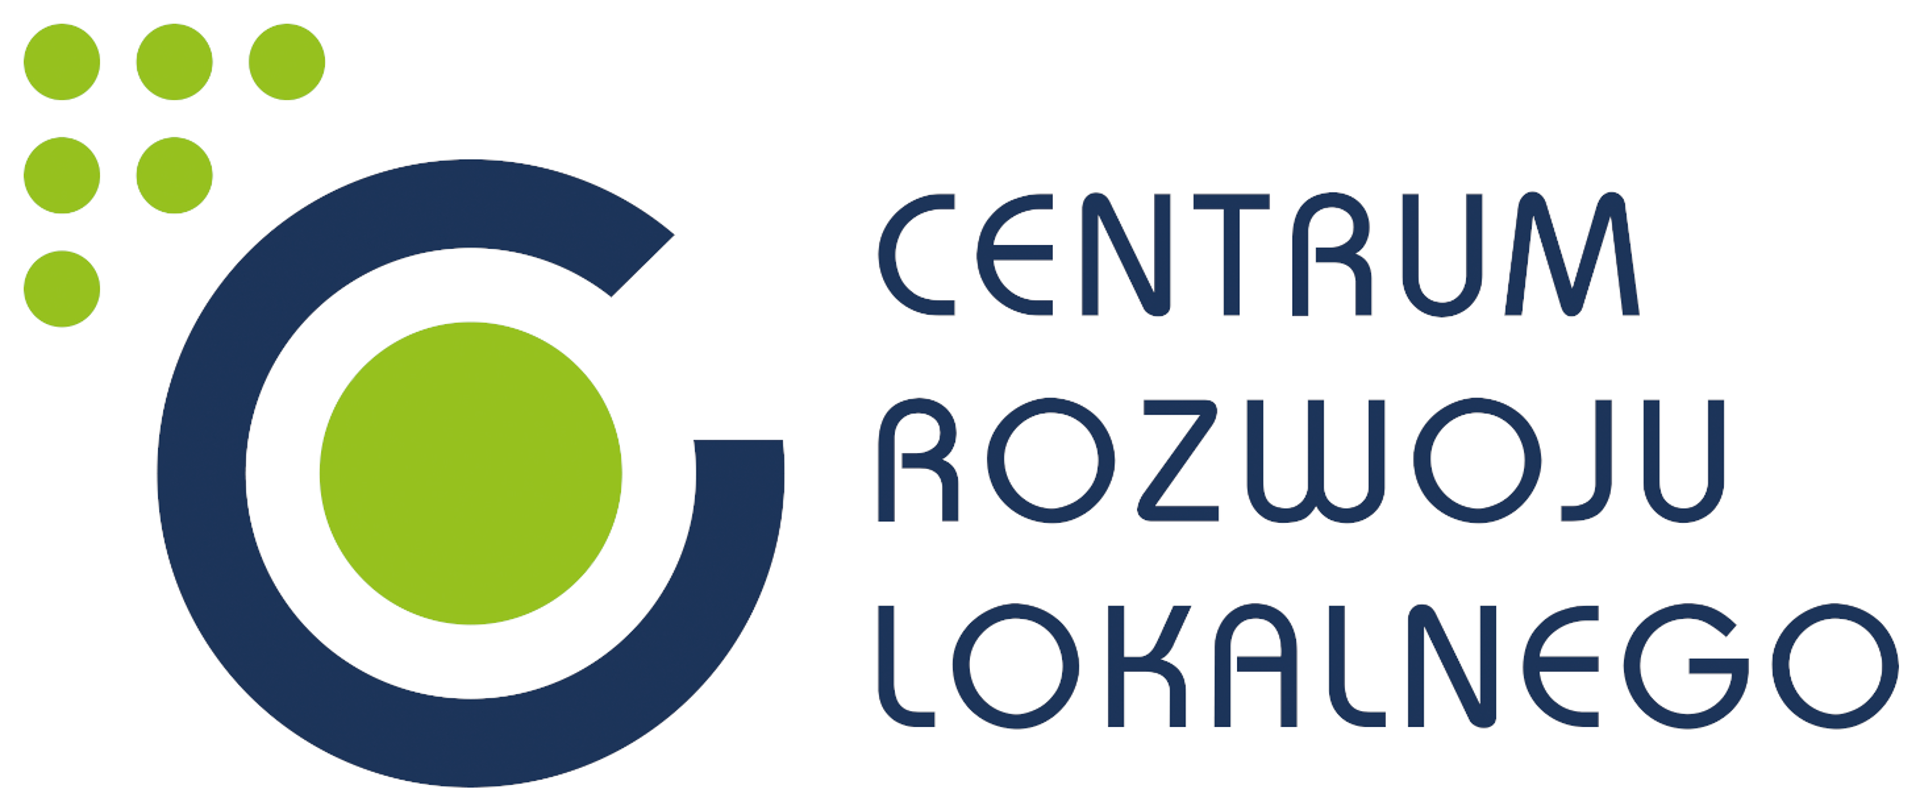 Logo Centrum Rozwoju Lokalnego